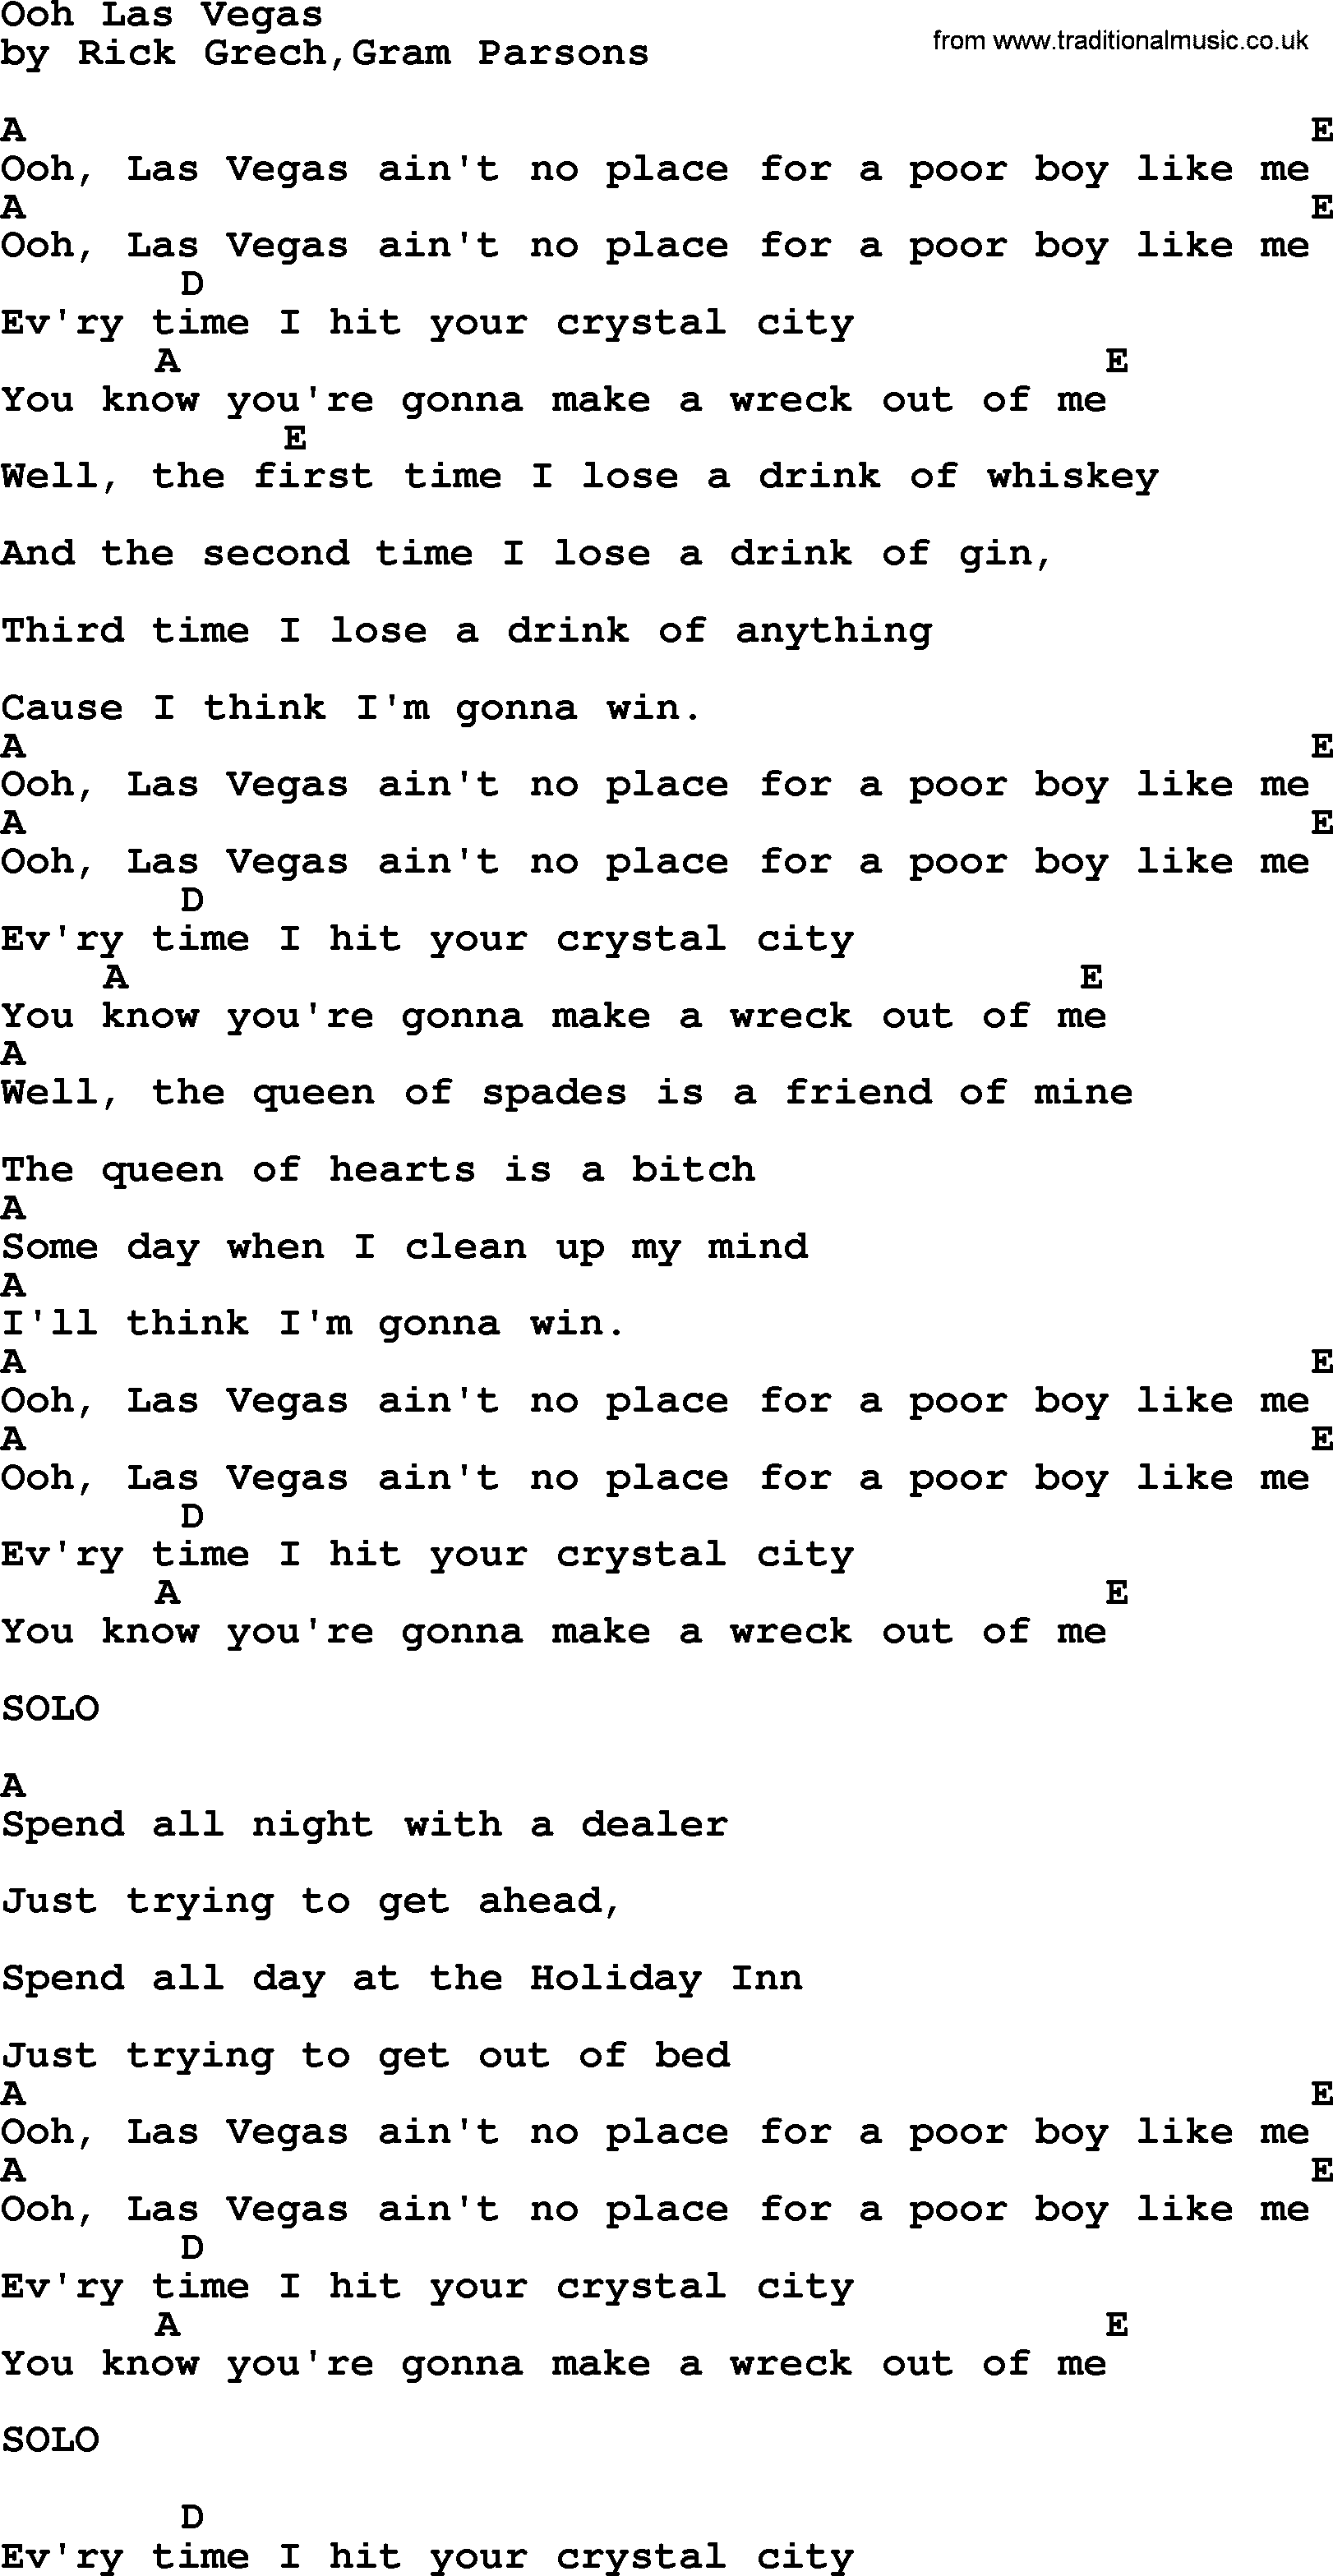 Emmylou Harris song: Ooh Las Vegas lyrics and chords